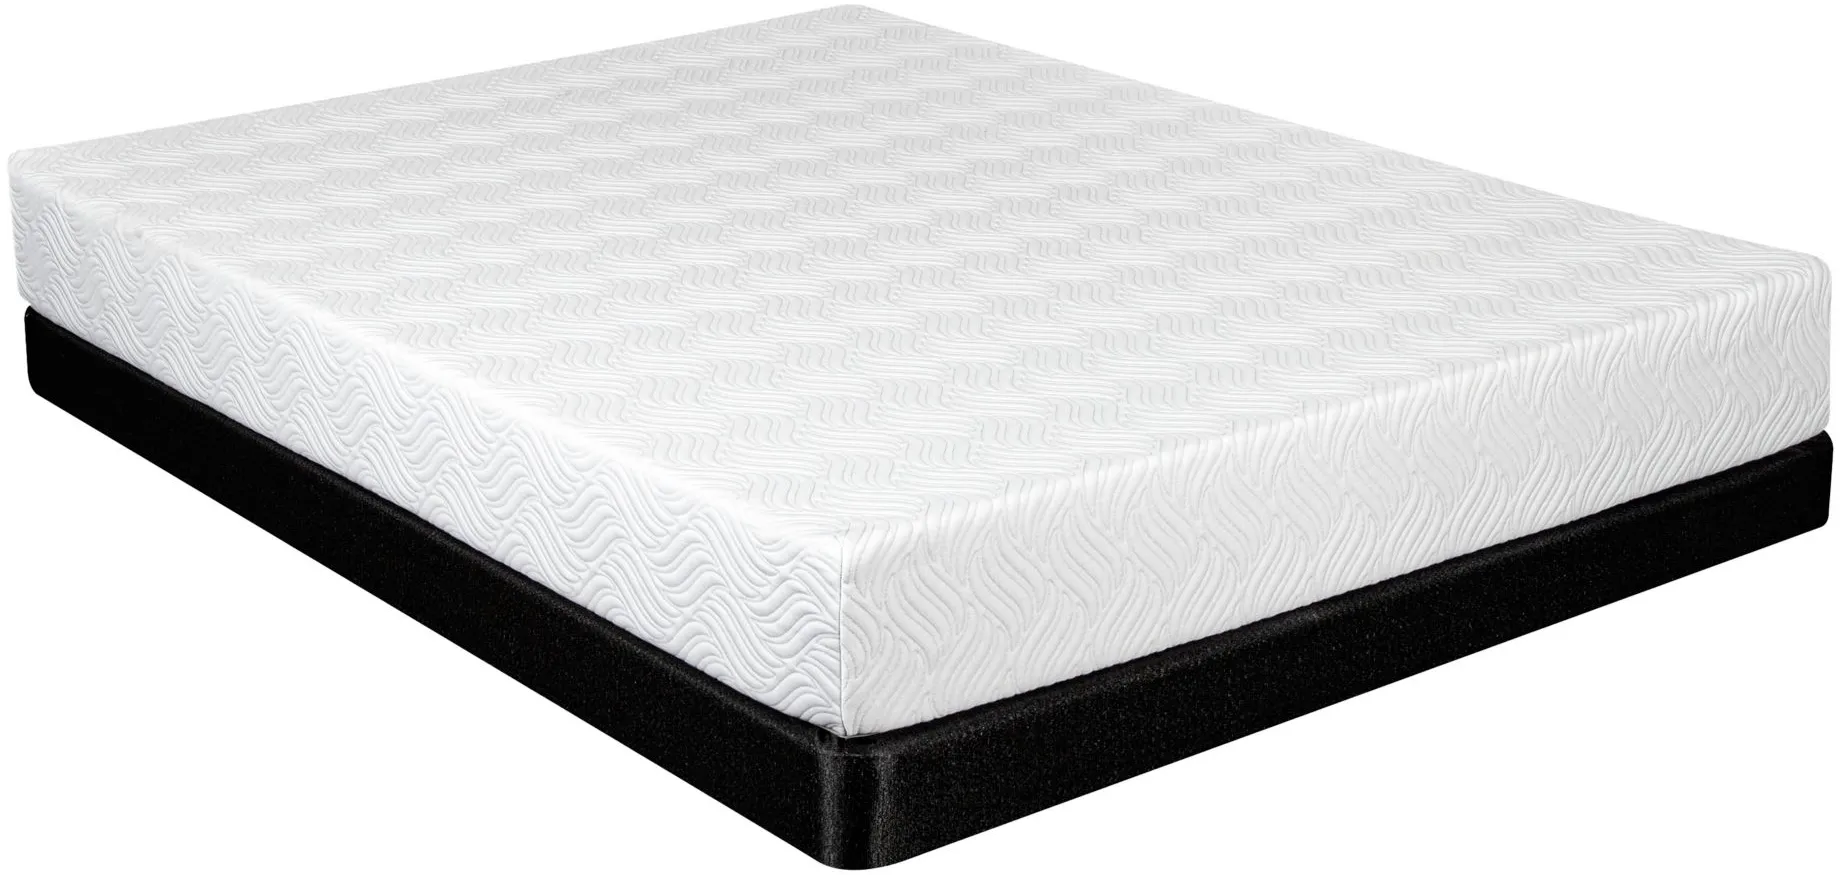 bellanest imperial euro top mattress